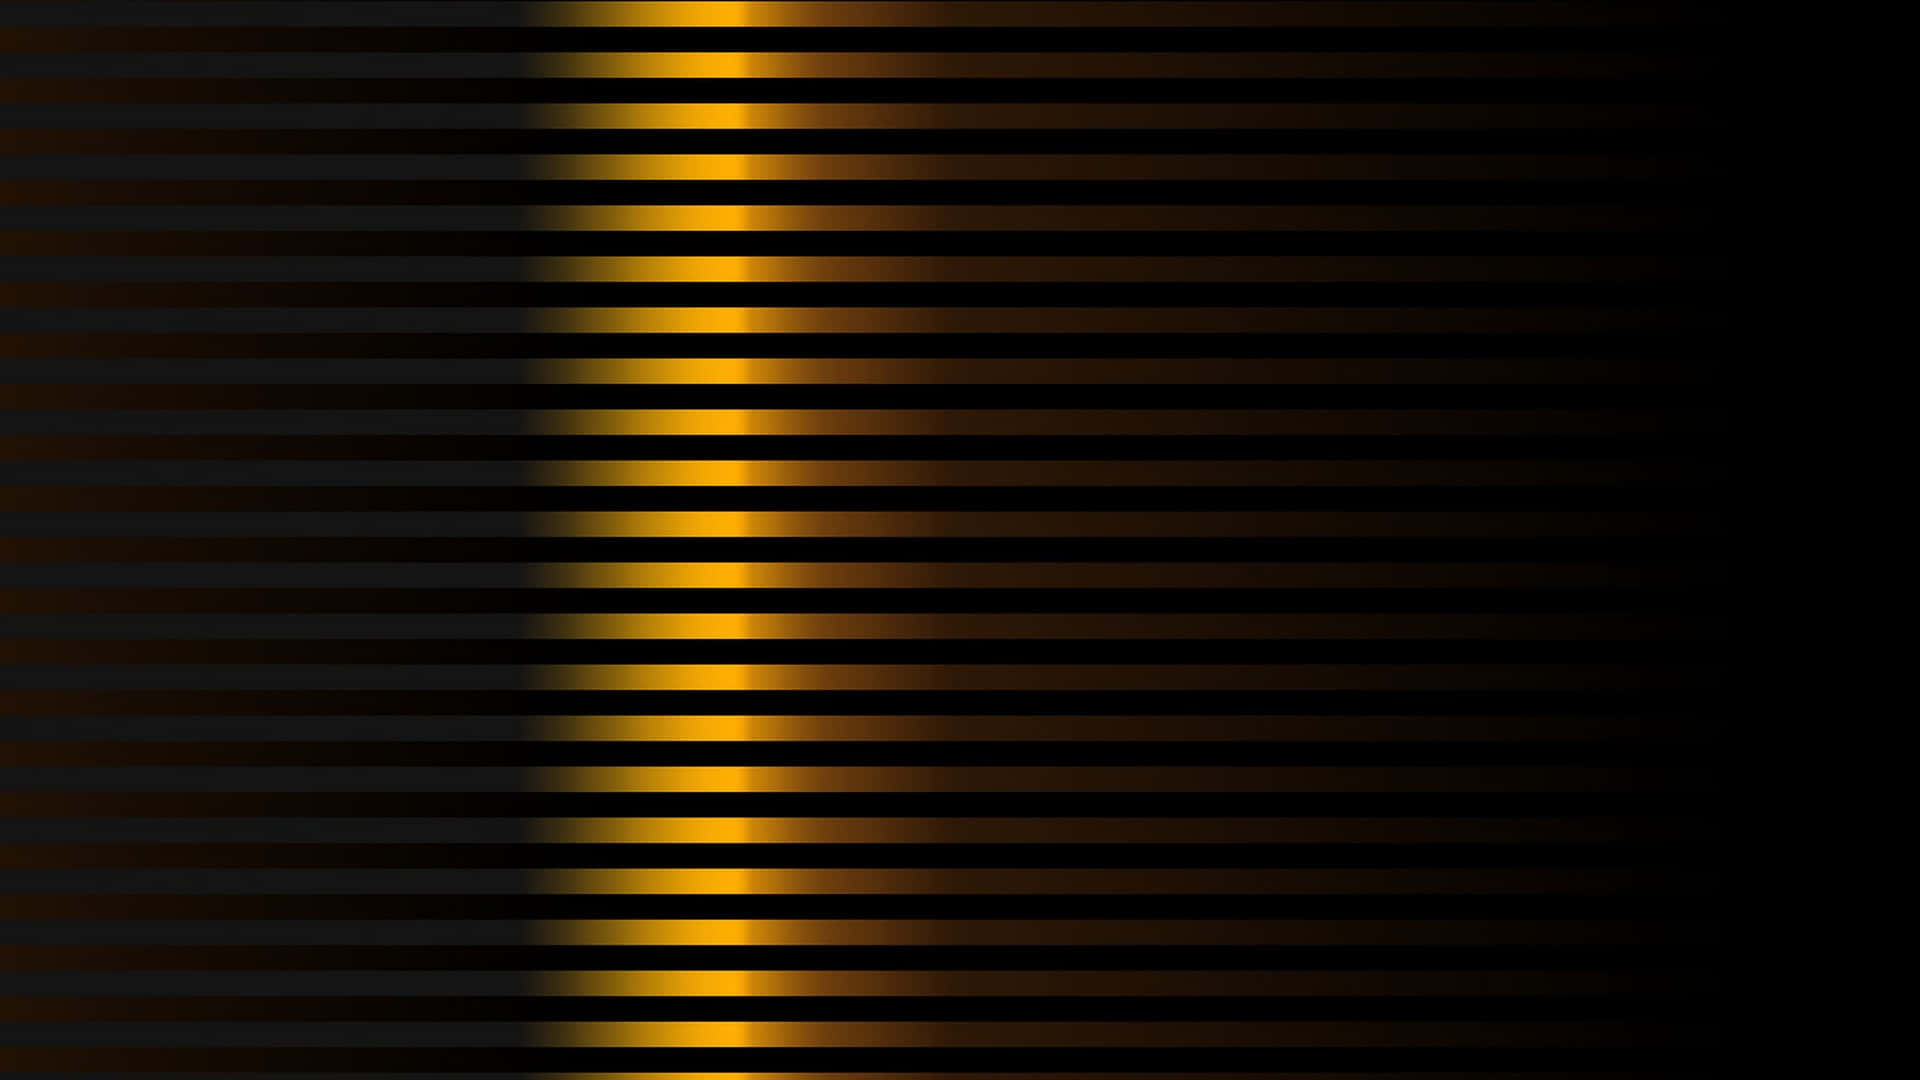 Monochrome Desktop Aesthetic In Black and Gold Wallpaper